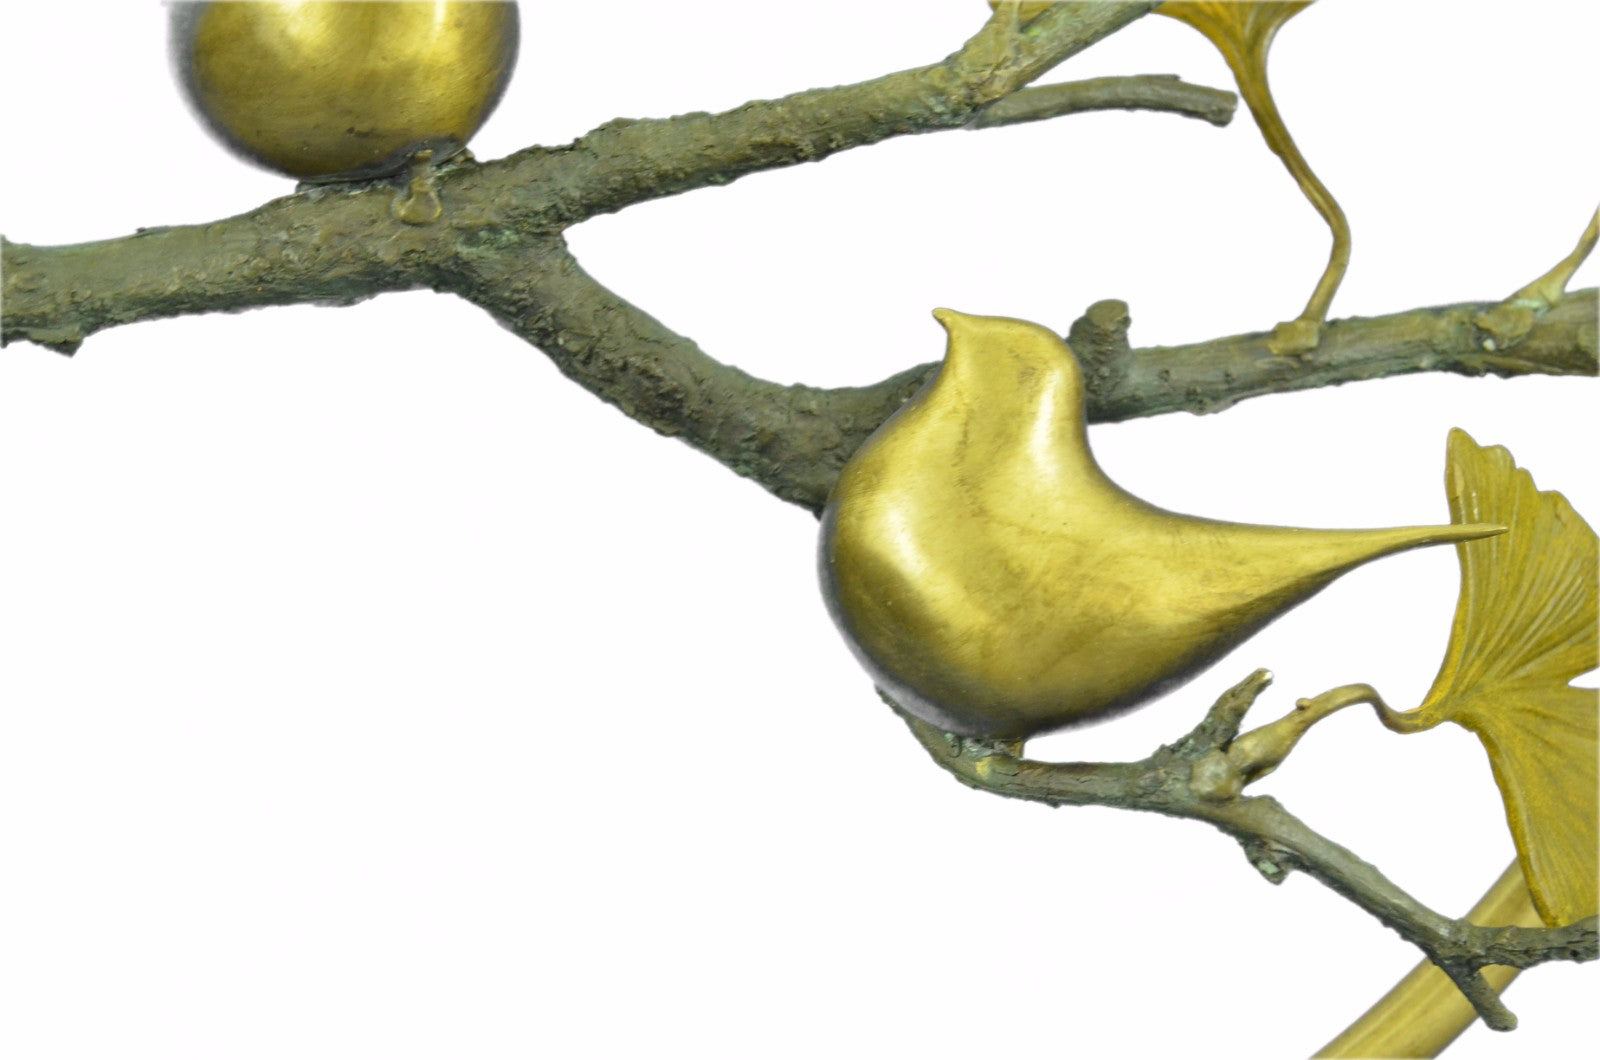 100% Solid Collectible Love Birds by Lost Wax Method Bronze Sculpture Figure